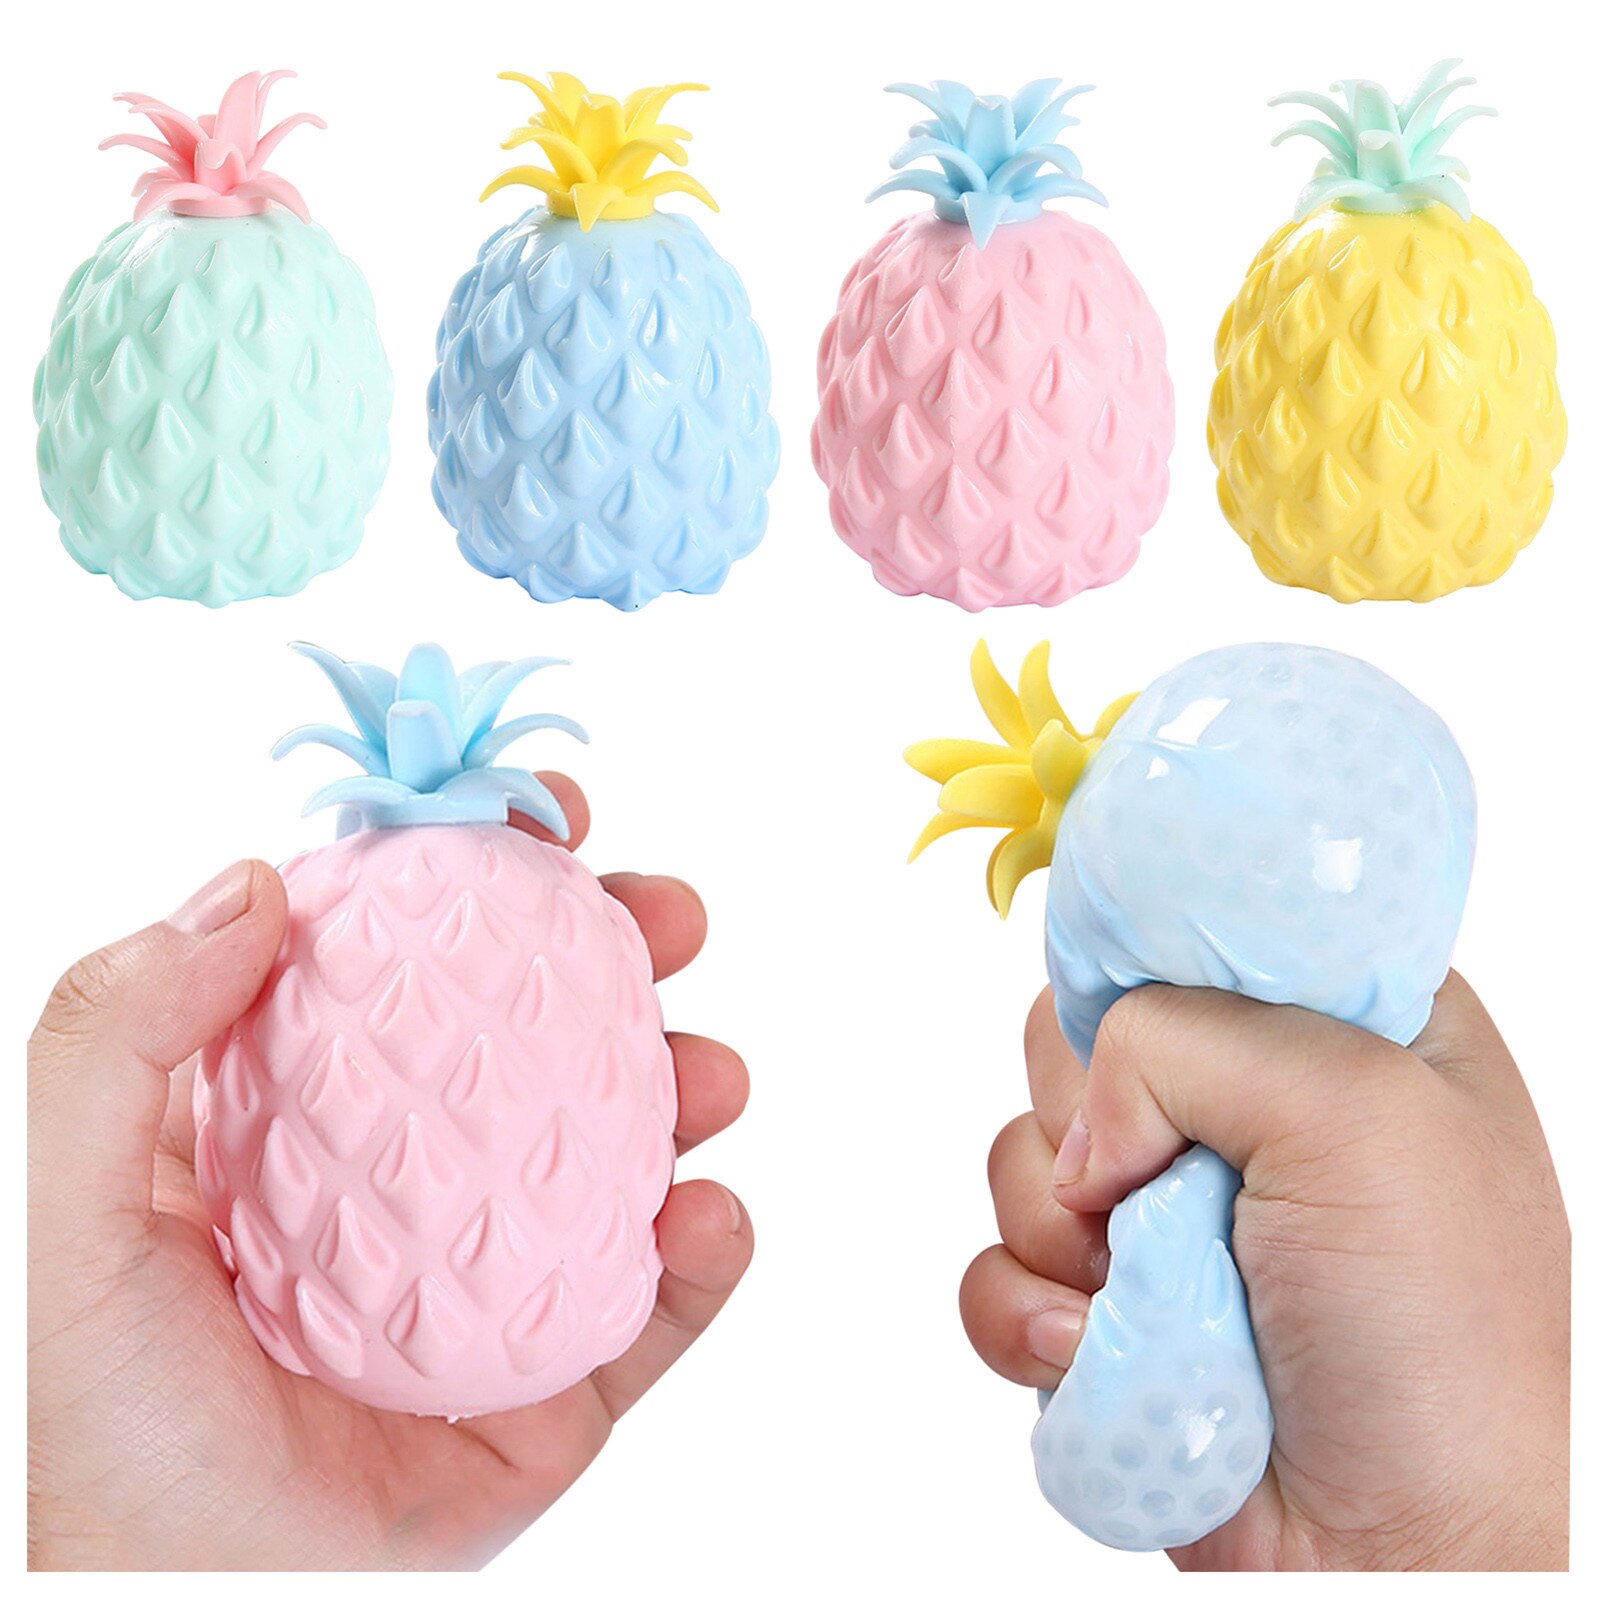 Balle-Anti-Stress-presser-ananas-jouet-Anti-stress-sensoriel-Fruit-Miniature-d-cor-de-bureau